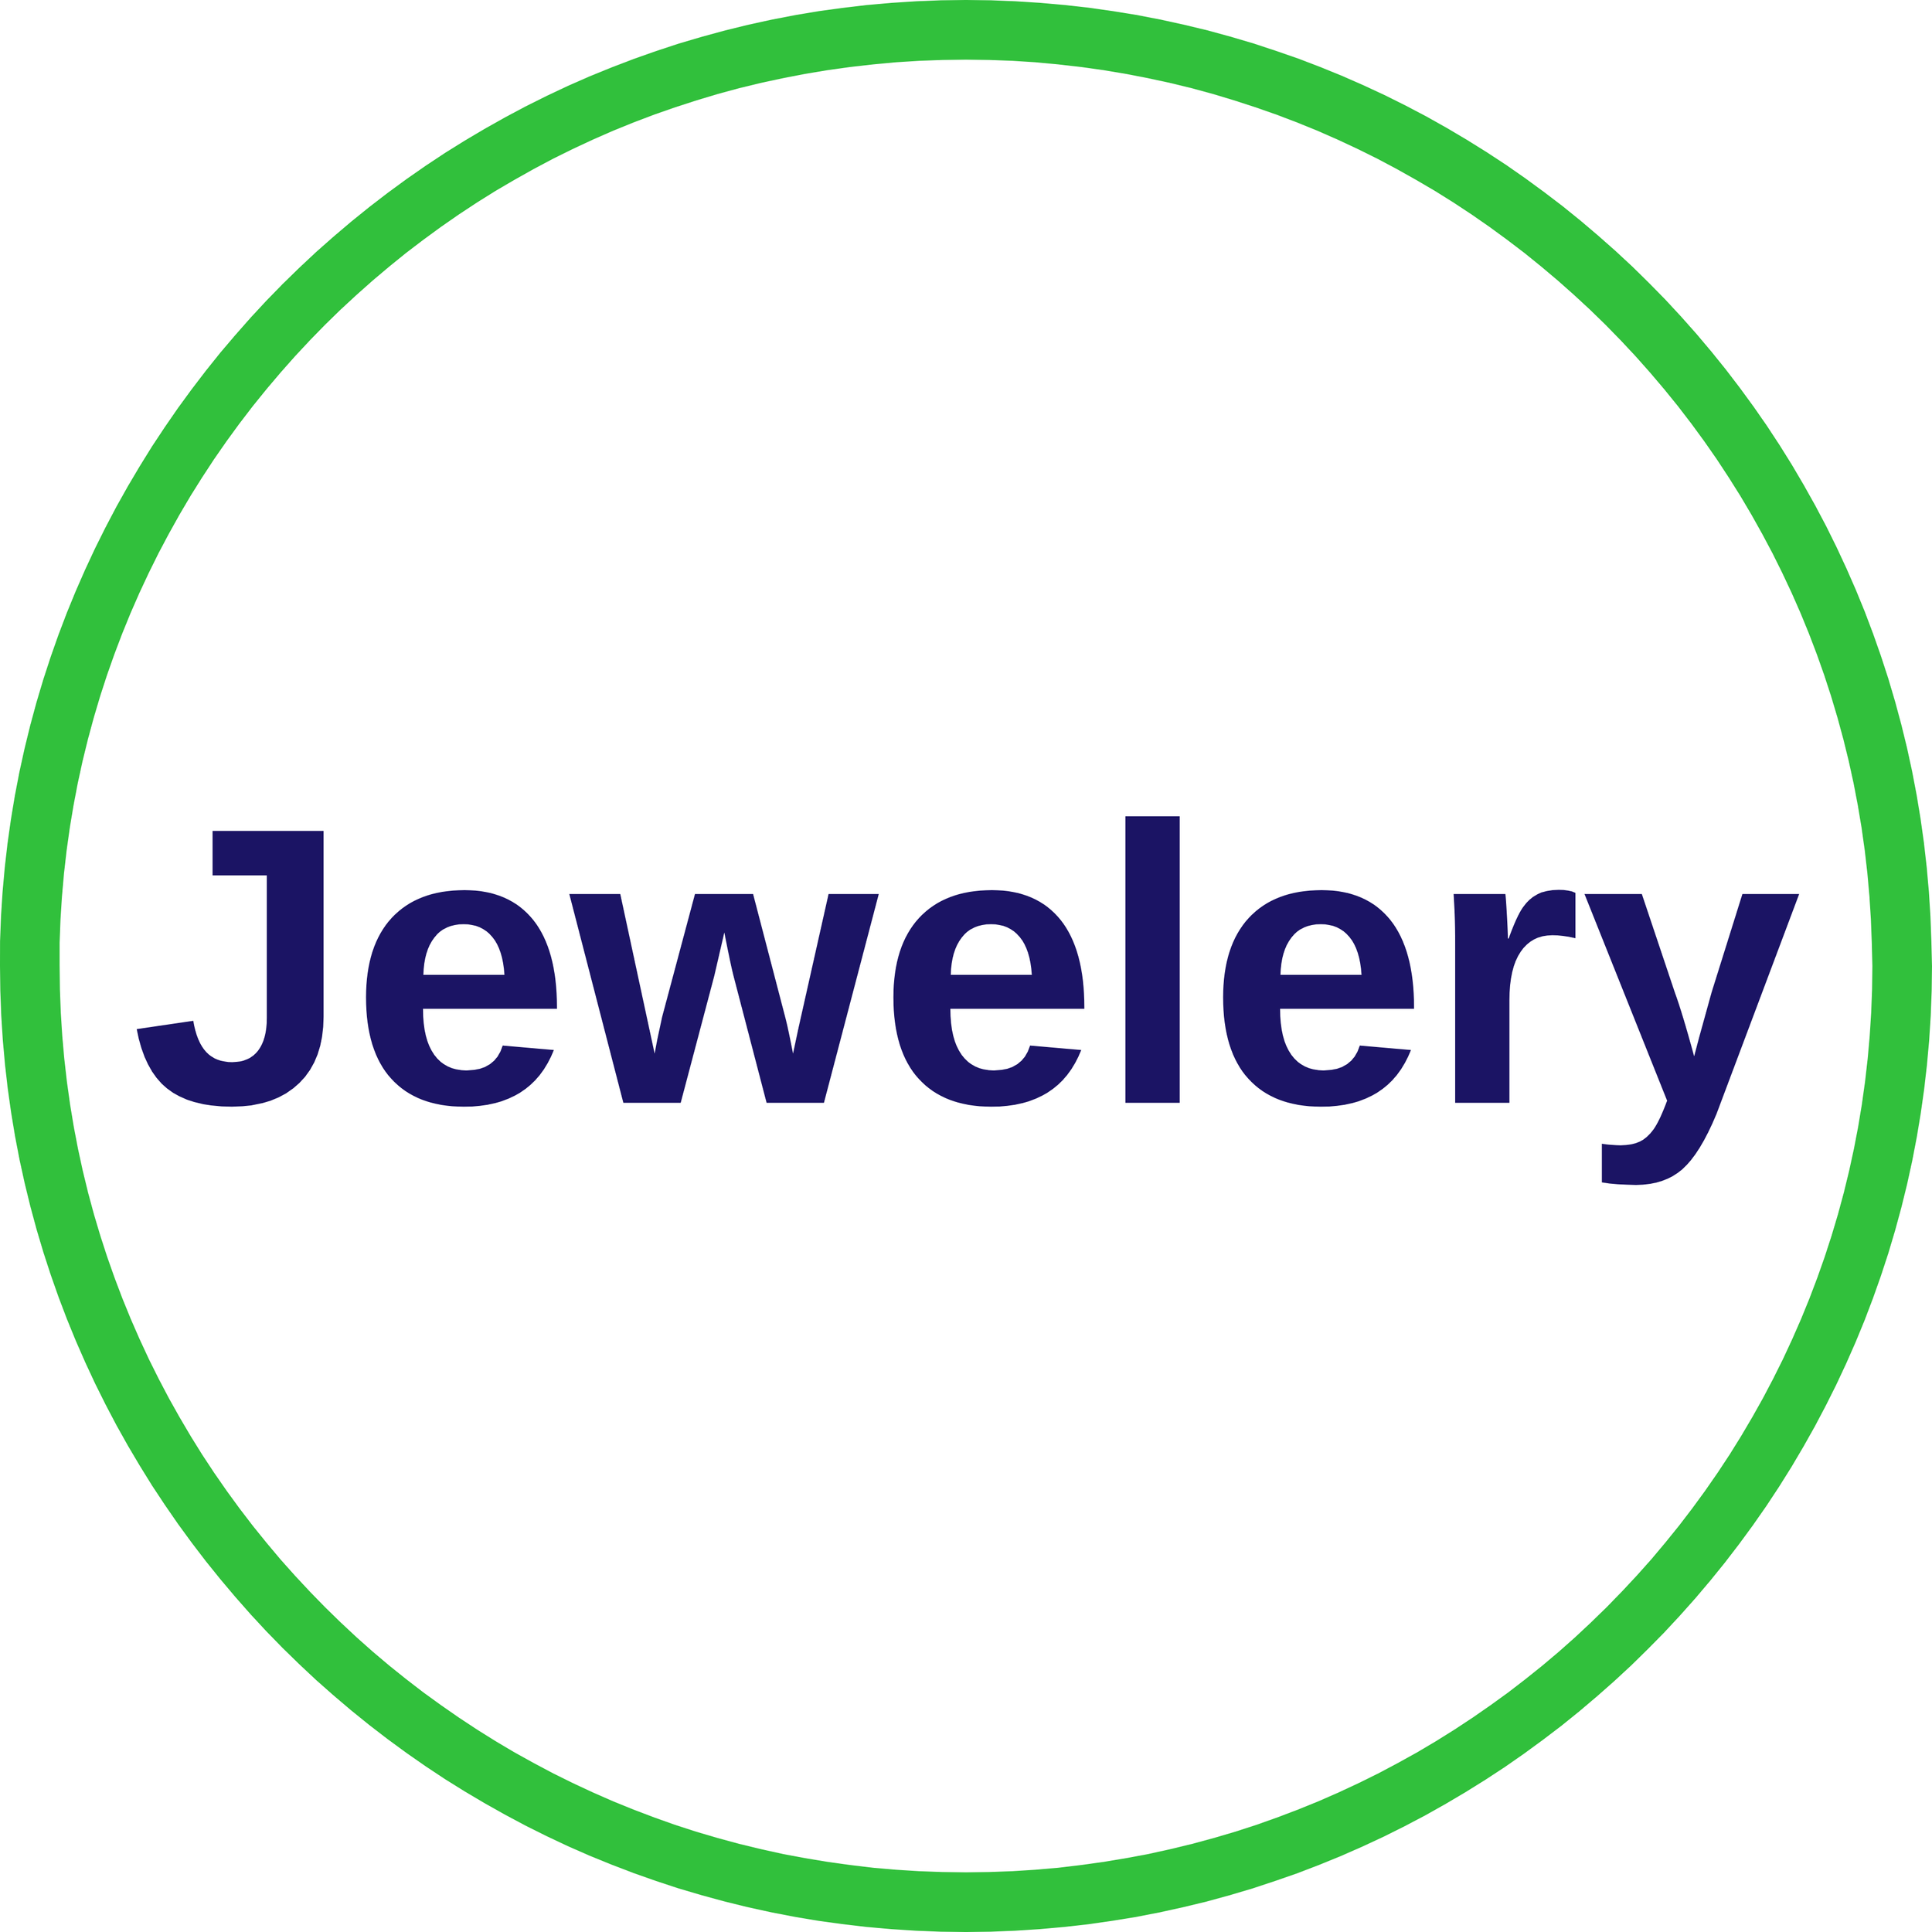 Jewelery (8).png